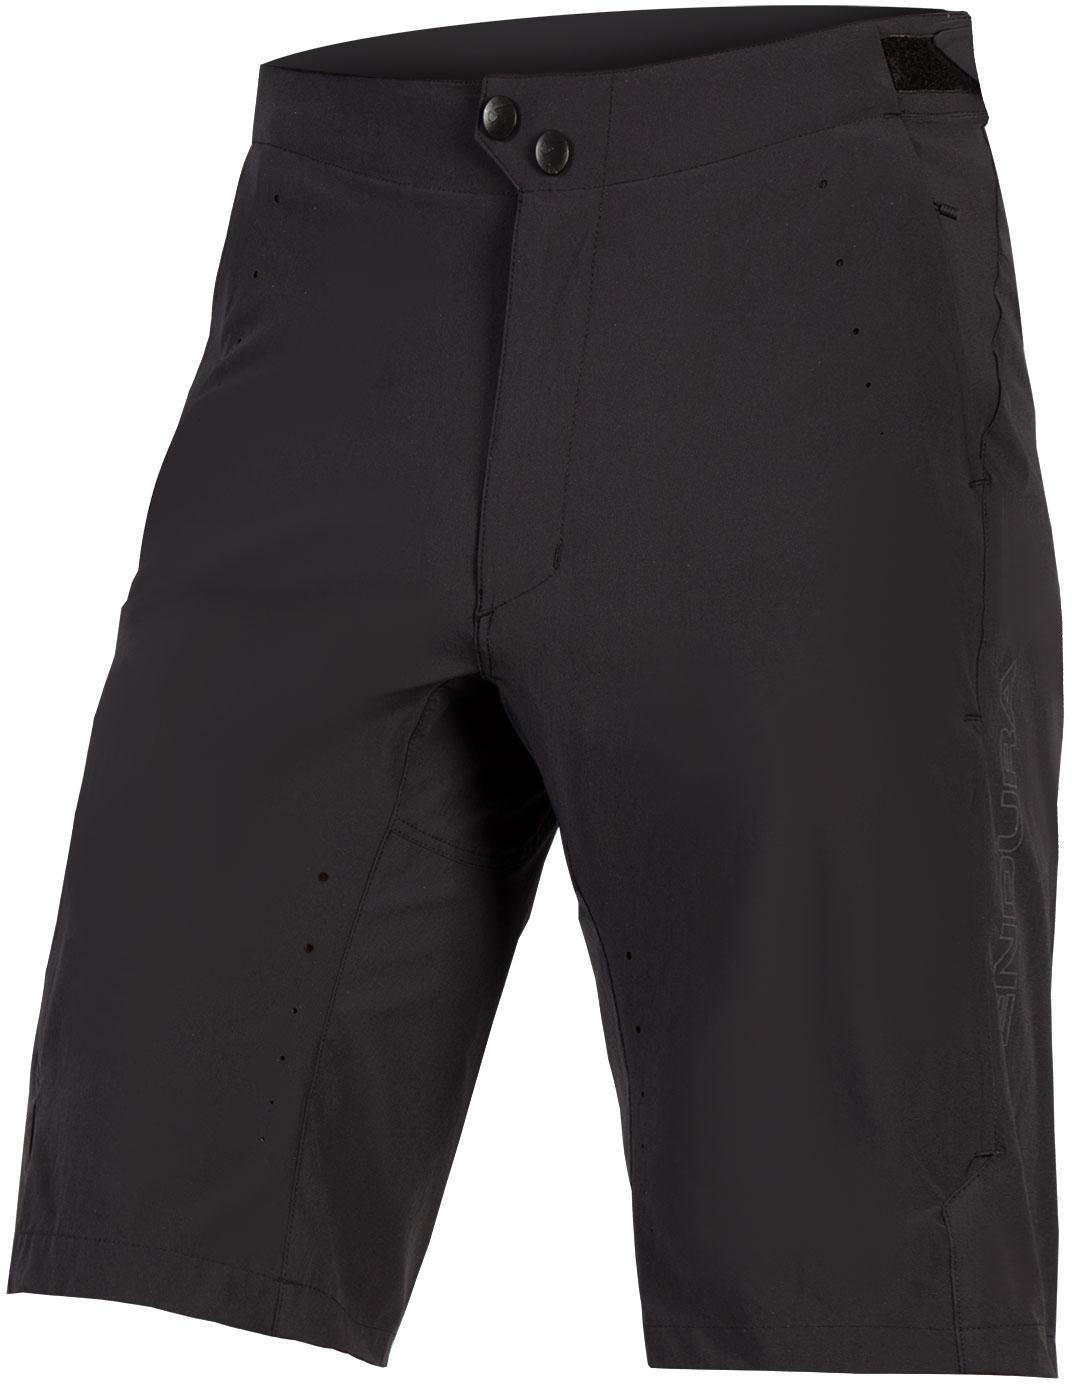 Endura Gv500 Foyle Shorts  Black